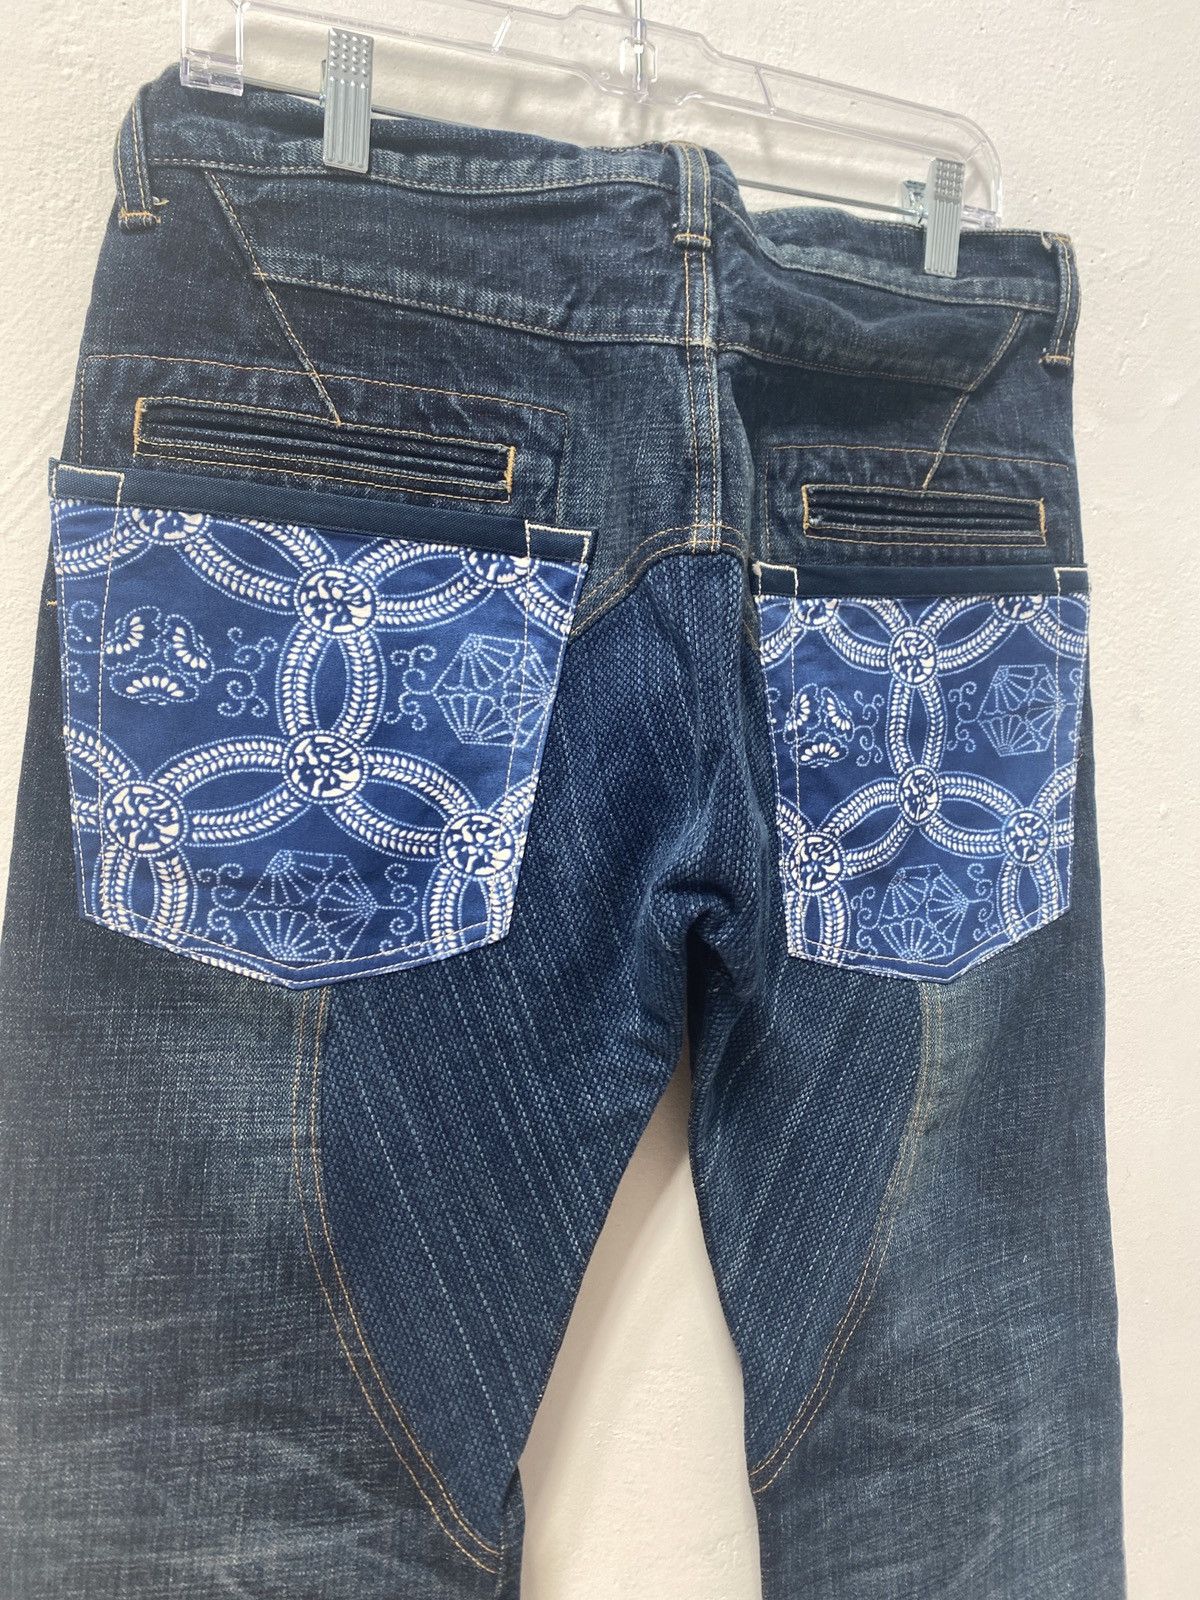 Junya Watanabe AW14 Boro Patterned Jeans Size US 32 / EU 48 - 3 Thumbnail